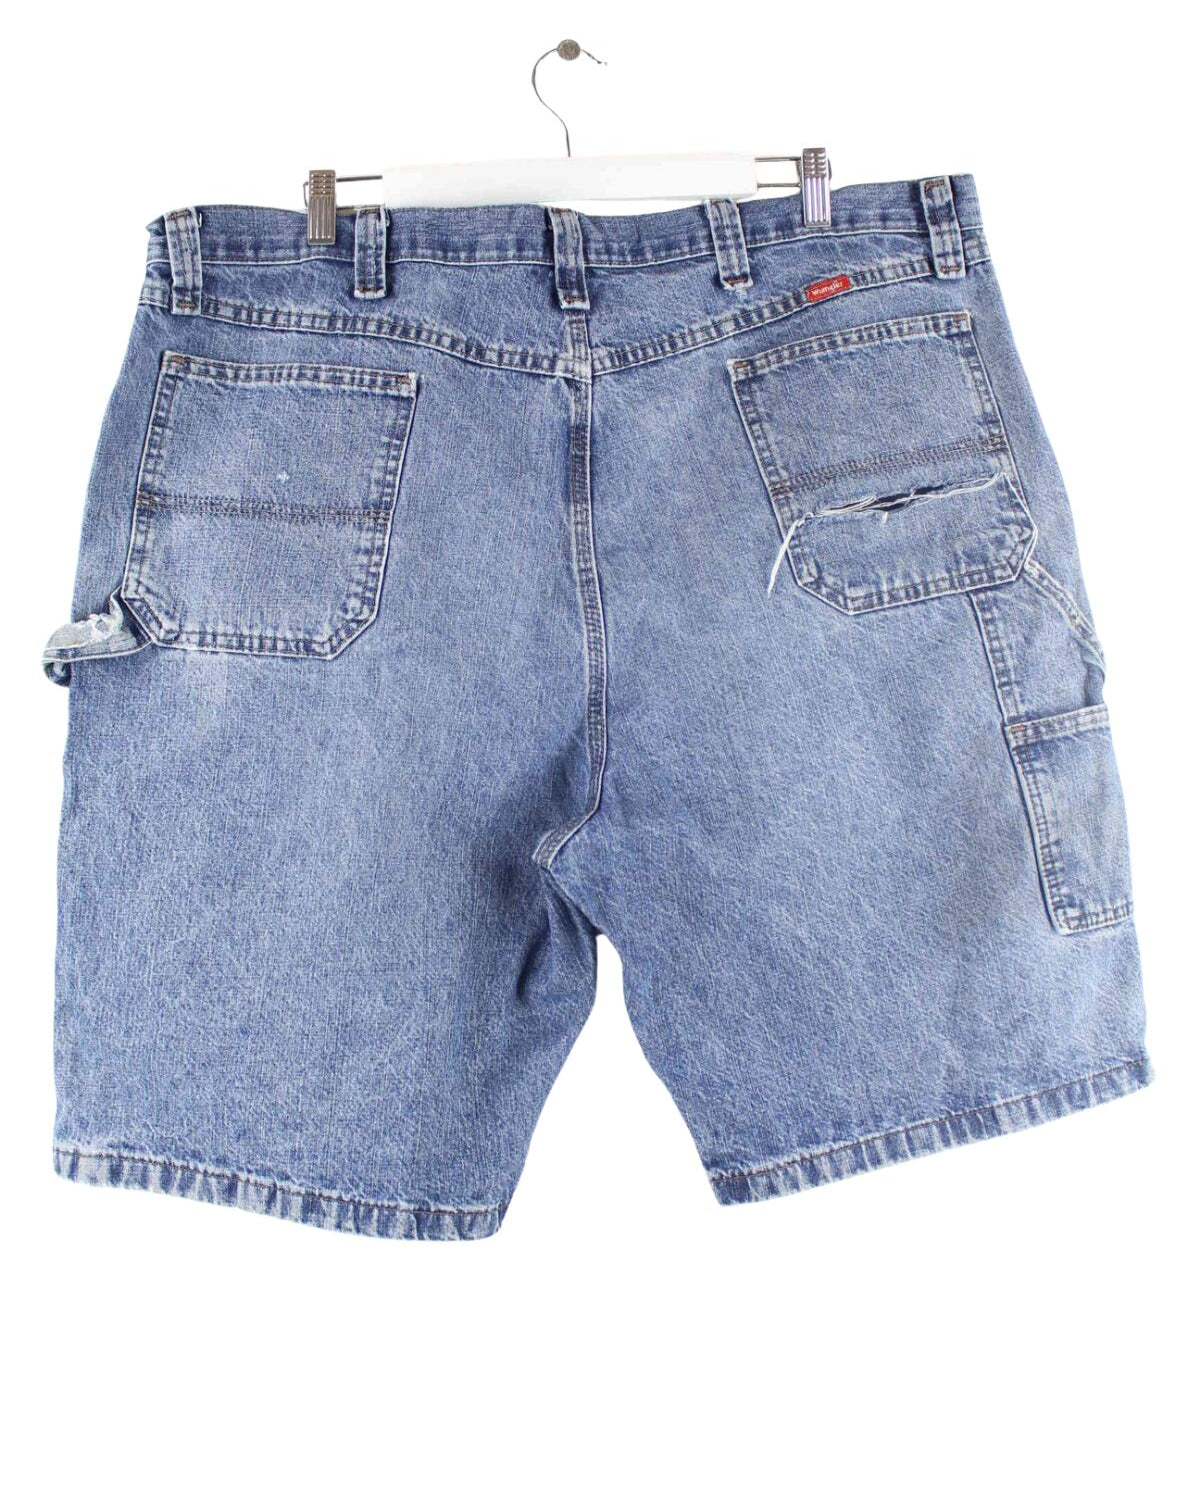 Wrangler y2k Carpenter Jorts / Jeans Shorts Blau W44 (back image)